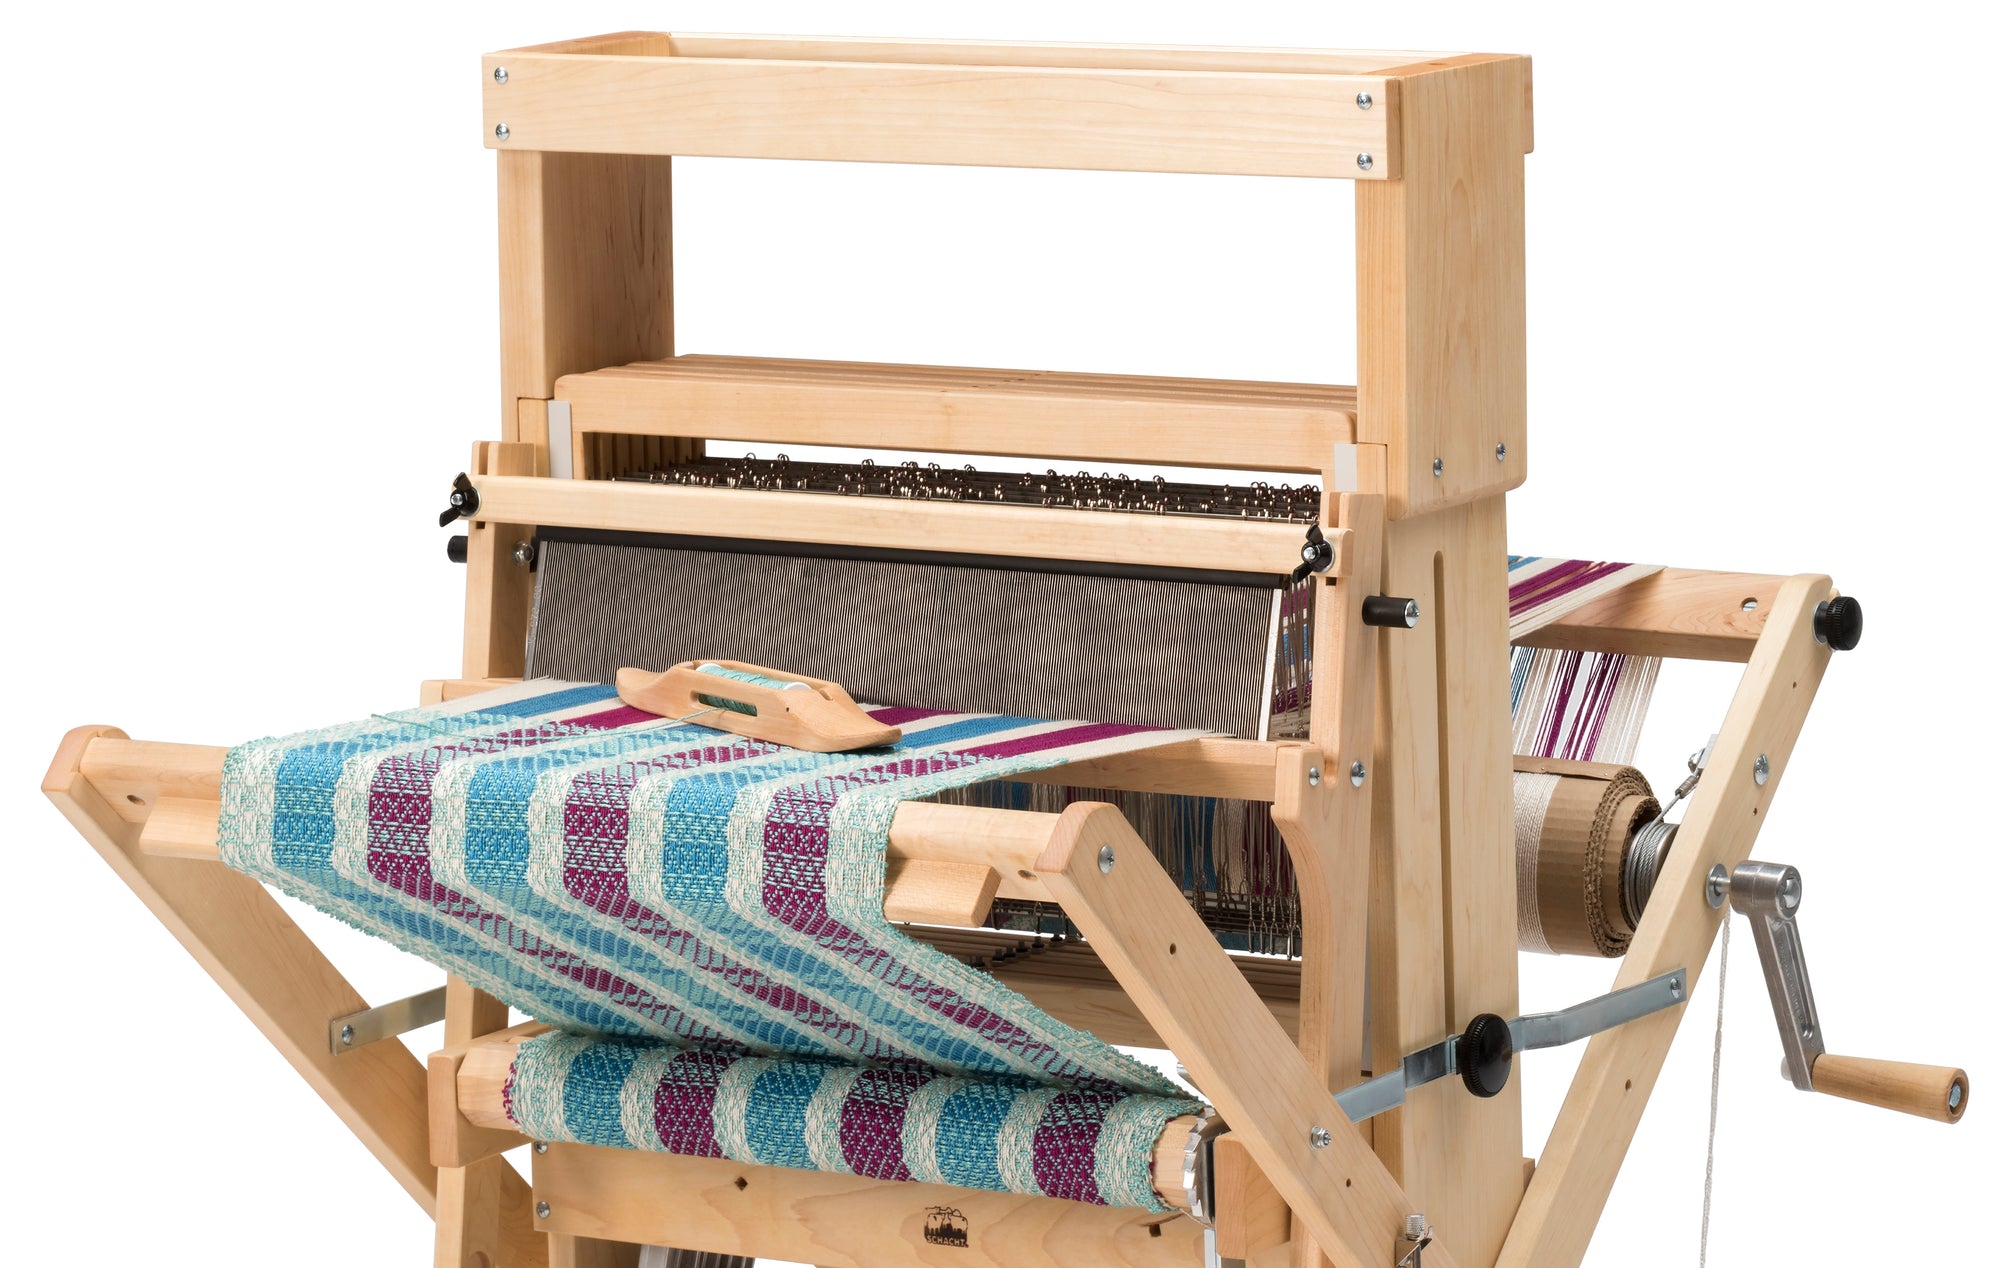 Pin Loom Weaving - A Photo Tutorial - Mielke's Fiber Arts